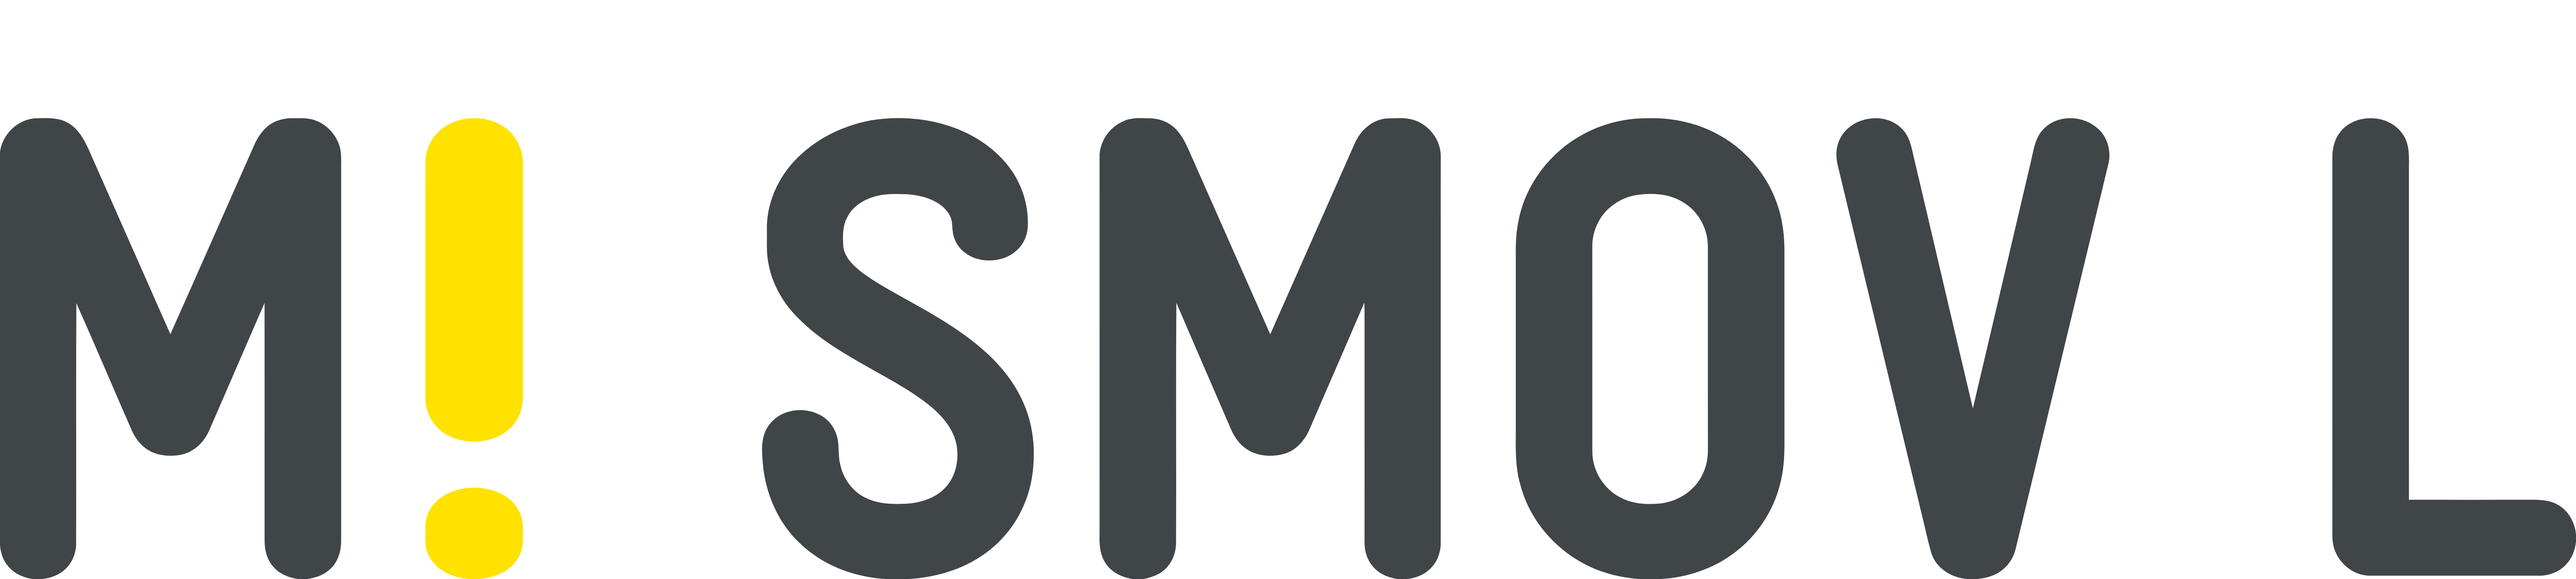 Masmovil Ibercom logo large (transparent PNG)